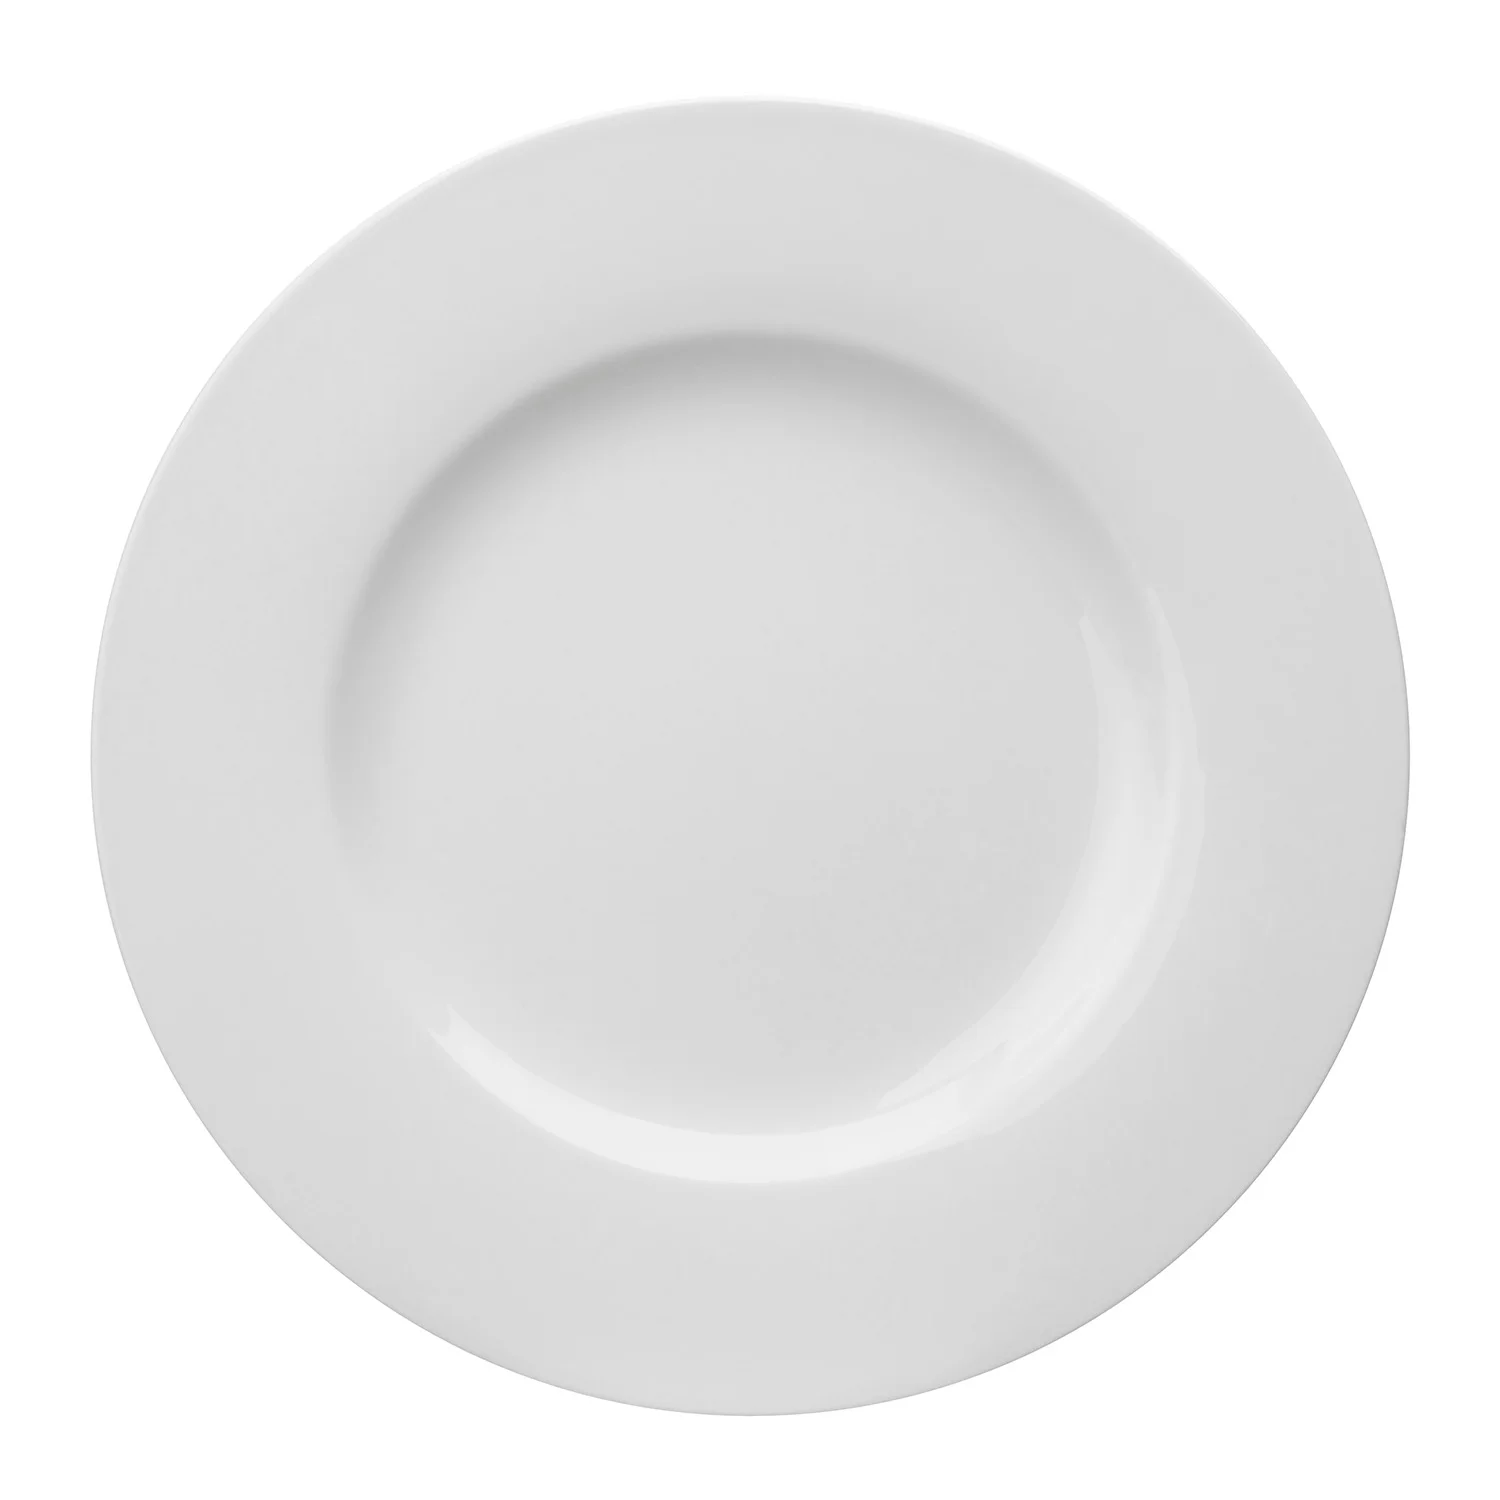 Flat plate. Olax тарелка обеденная 25см. Тарелка Benedikt Diana 27 см. 22h223kn076/2163. Тарелка белая круглая.